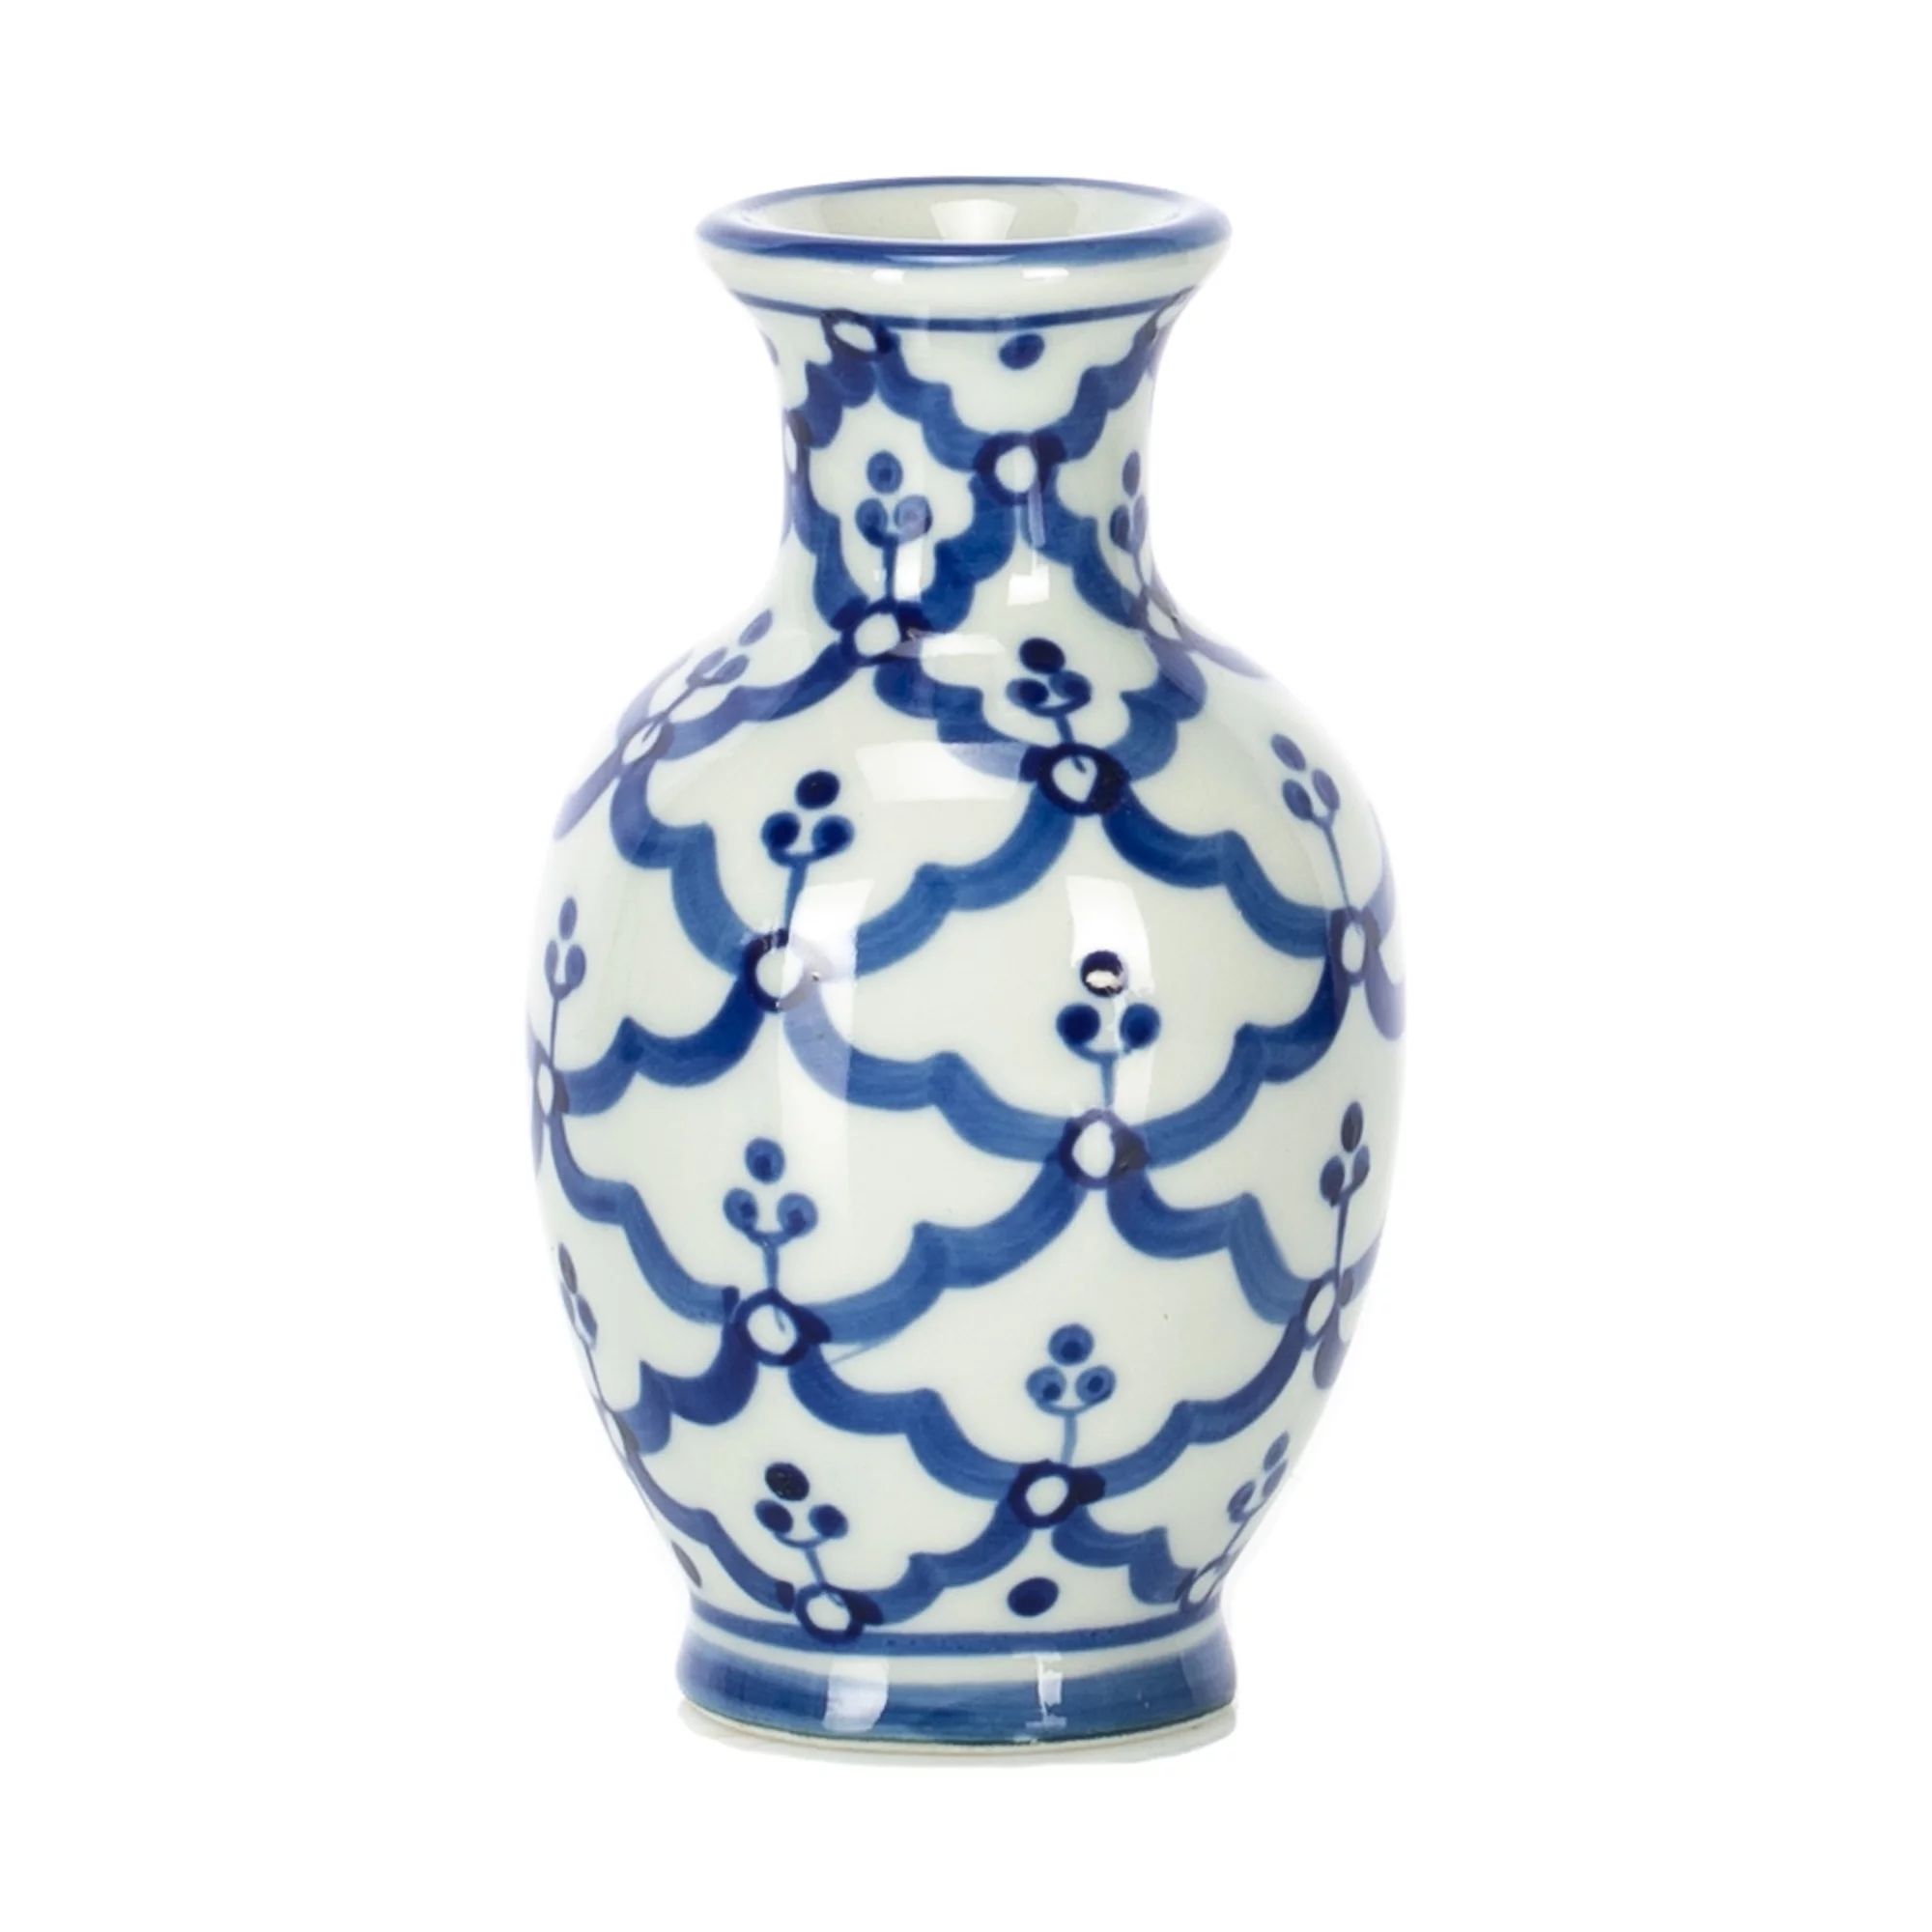 Tiny Classic Round Urn Glossy Blue and White 4 inch Porcelain Ceramic Vase | Walmart (US)